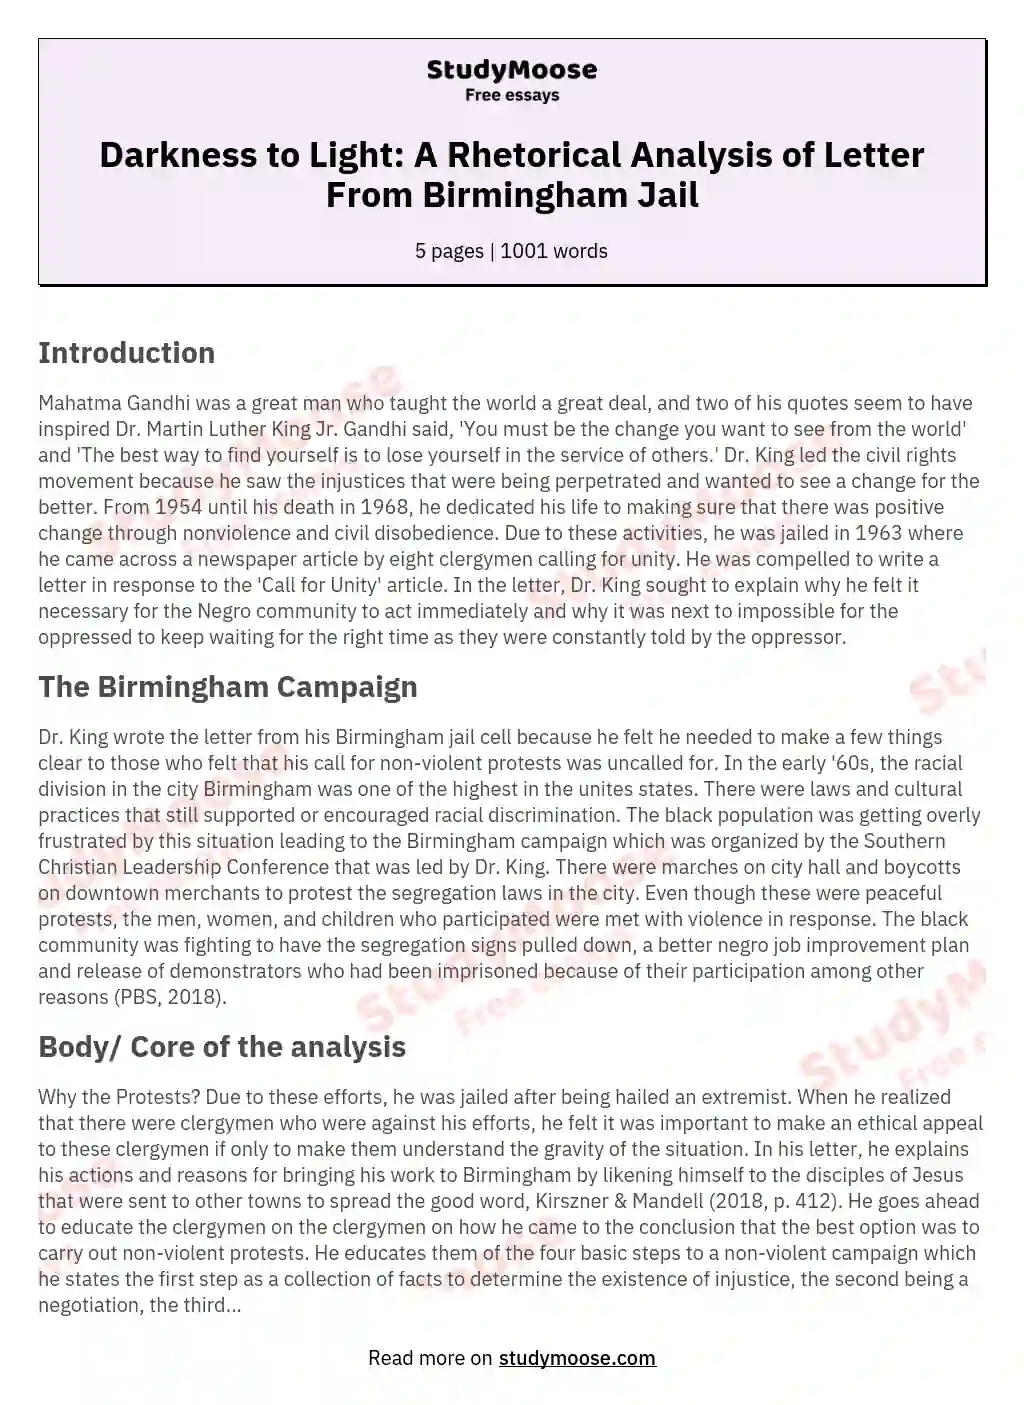 letter from birmingham jail essay conclusion